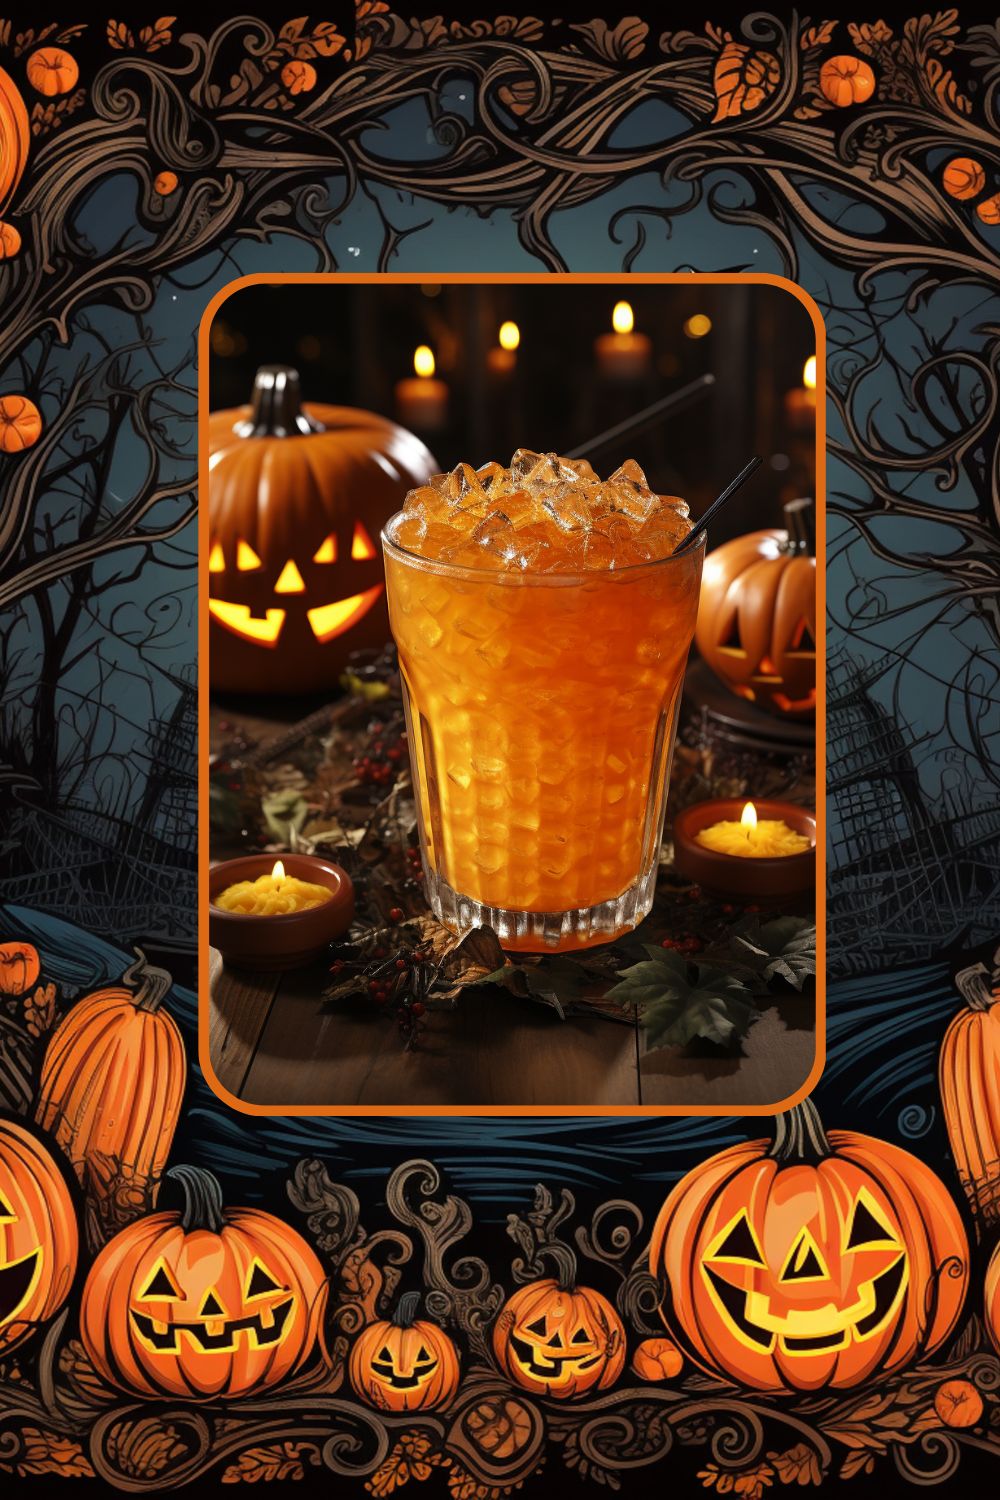 Fanta Orange in a Glass for Halloween